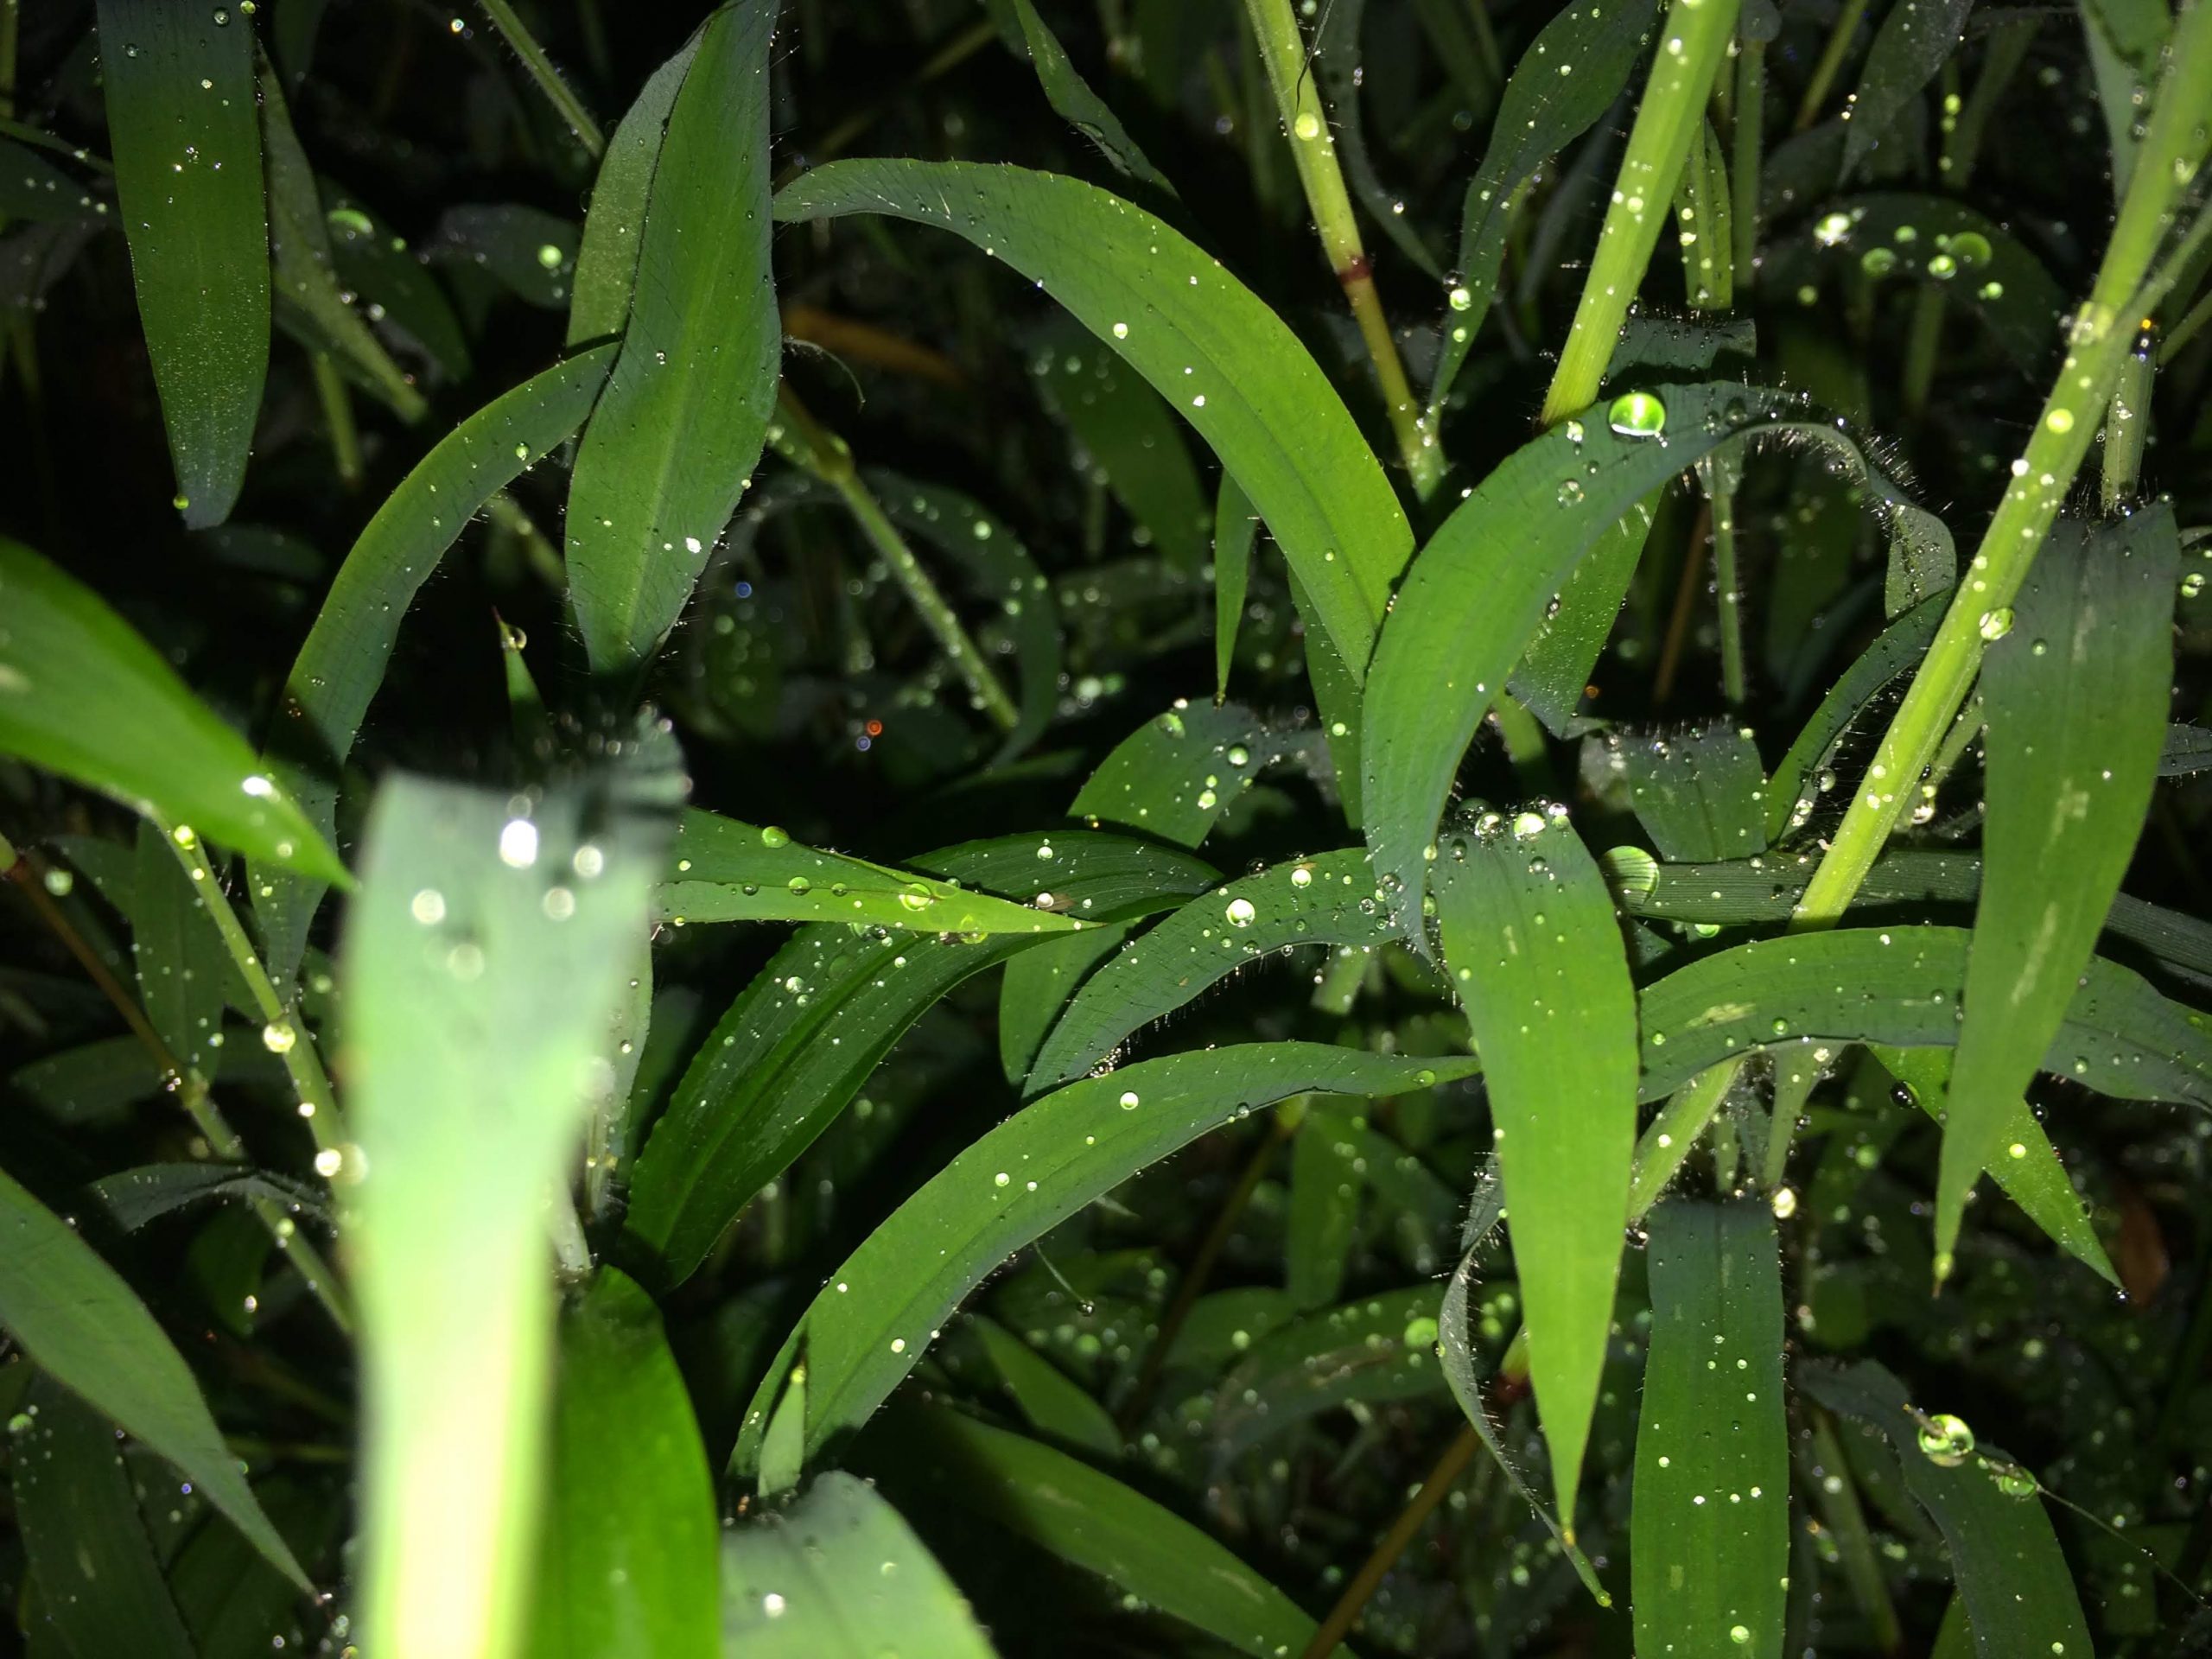 Grass in Rainy days